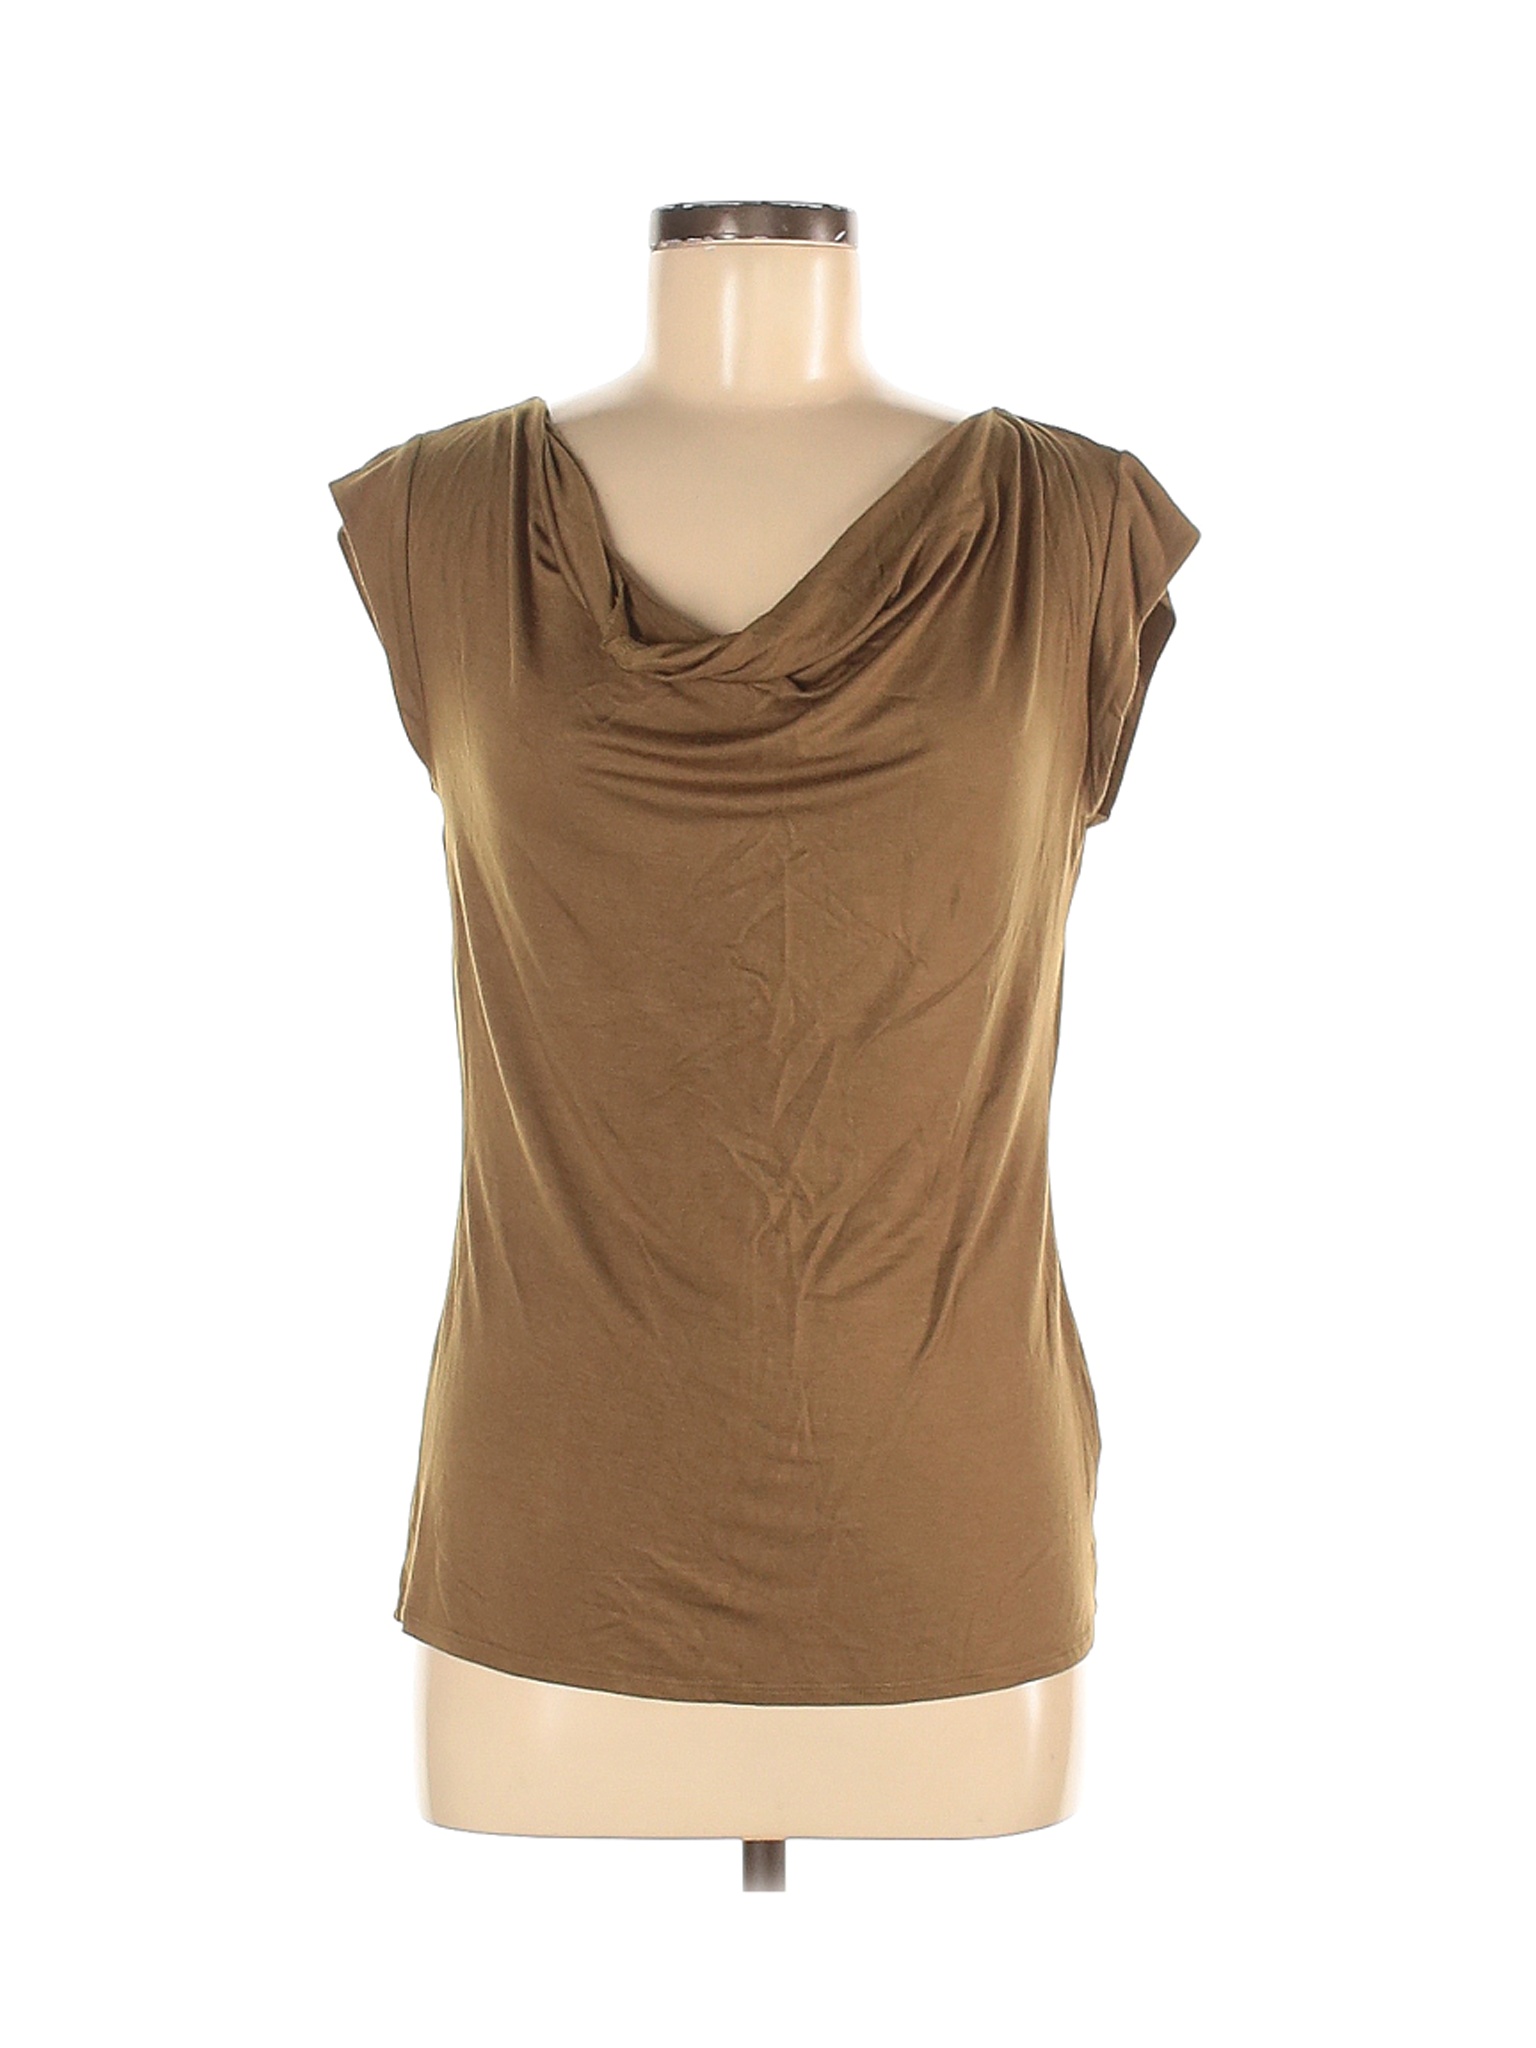 Adrienne Vittadini Women Brown Short Sleeve Top M | eBay